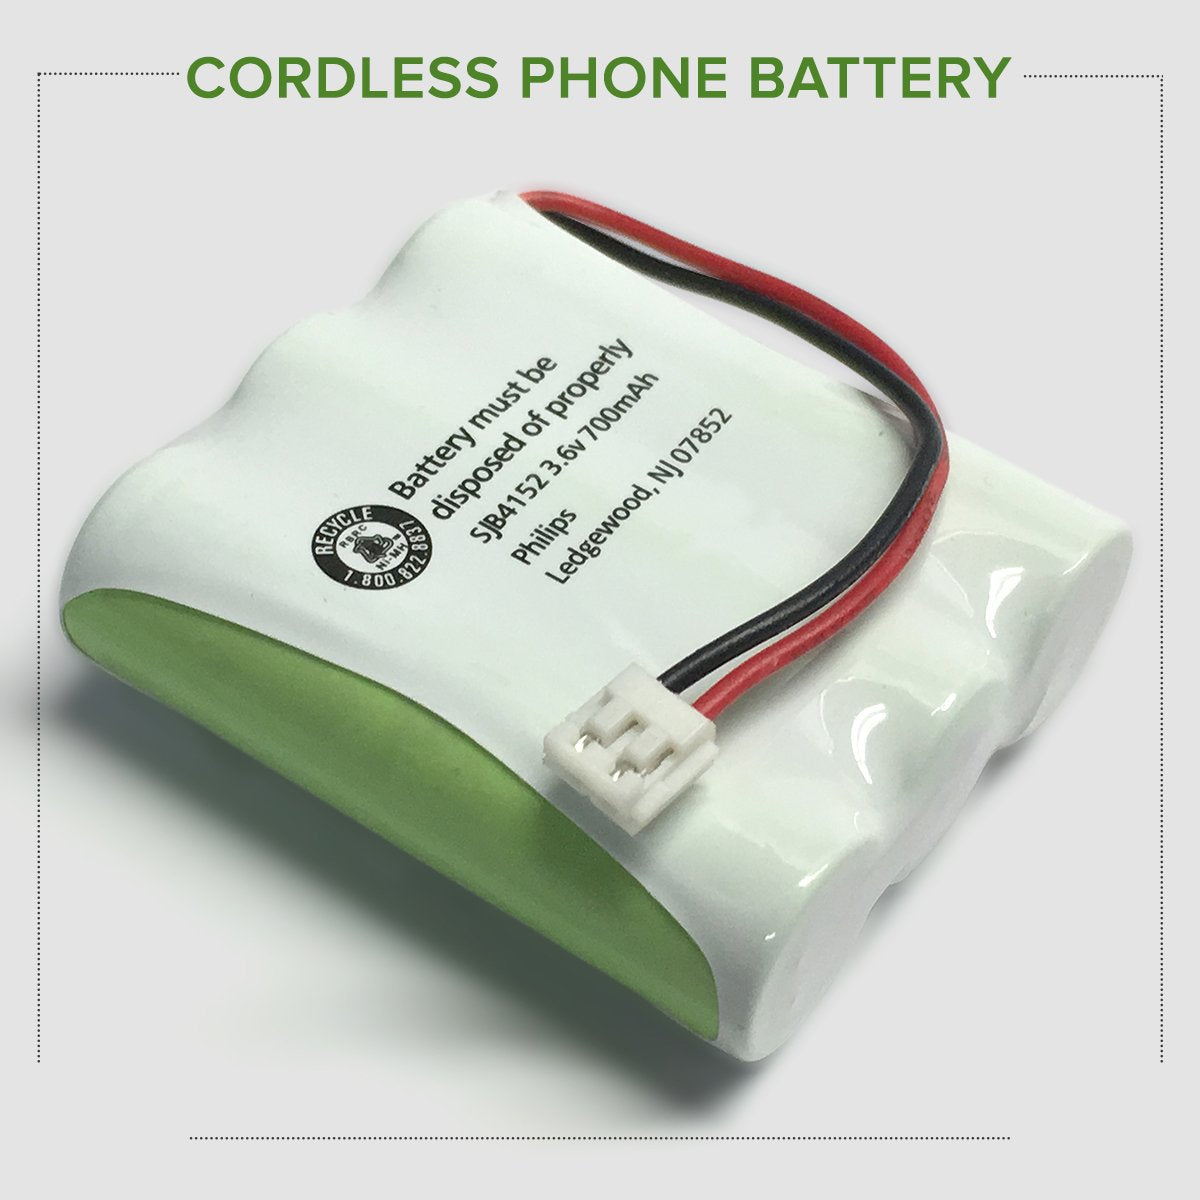 GE 2-6993GE1 Cordless Phone Battery